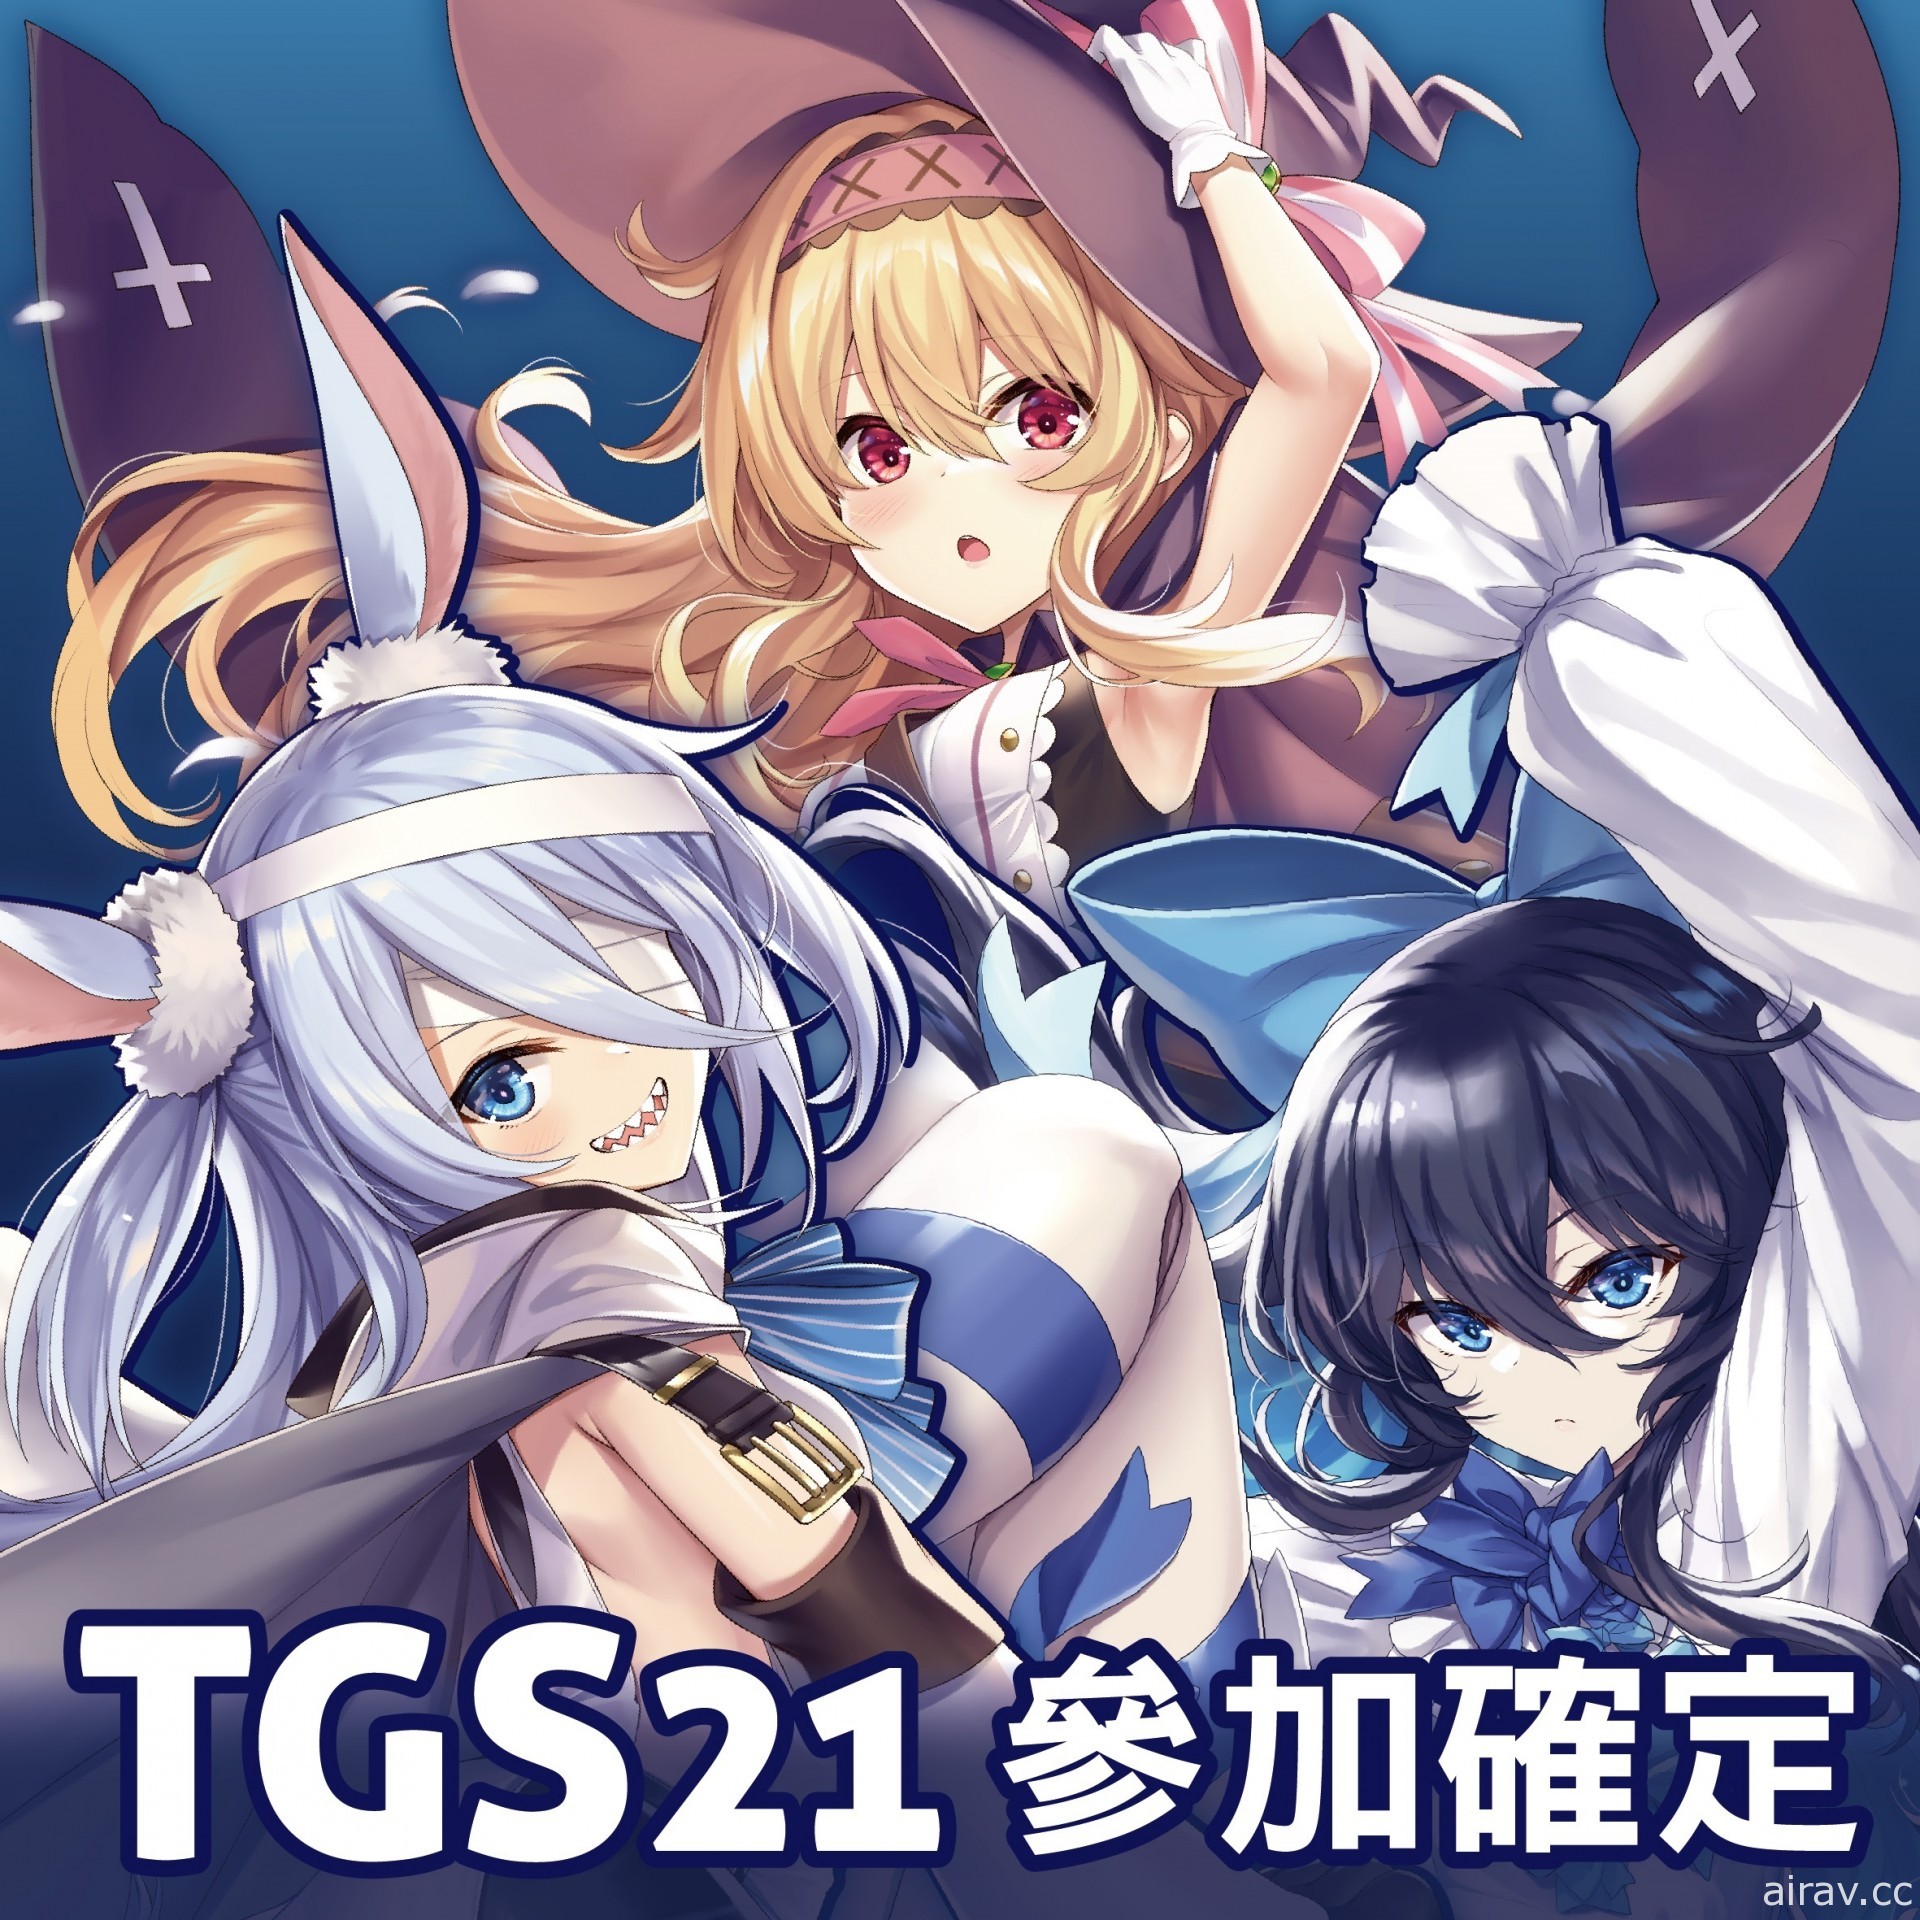 【TGS 21】《小魔女诺贝塔》预告将在东京电玩展揭开新游戏内容